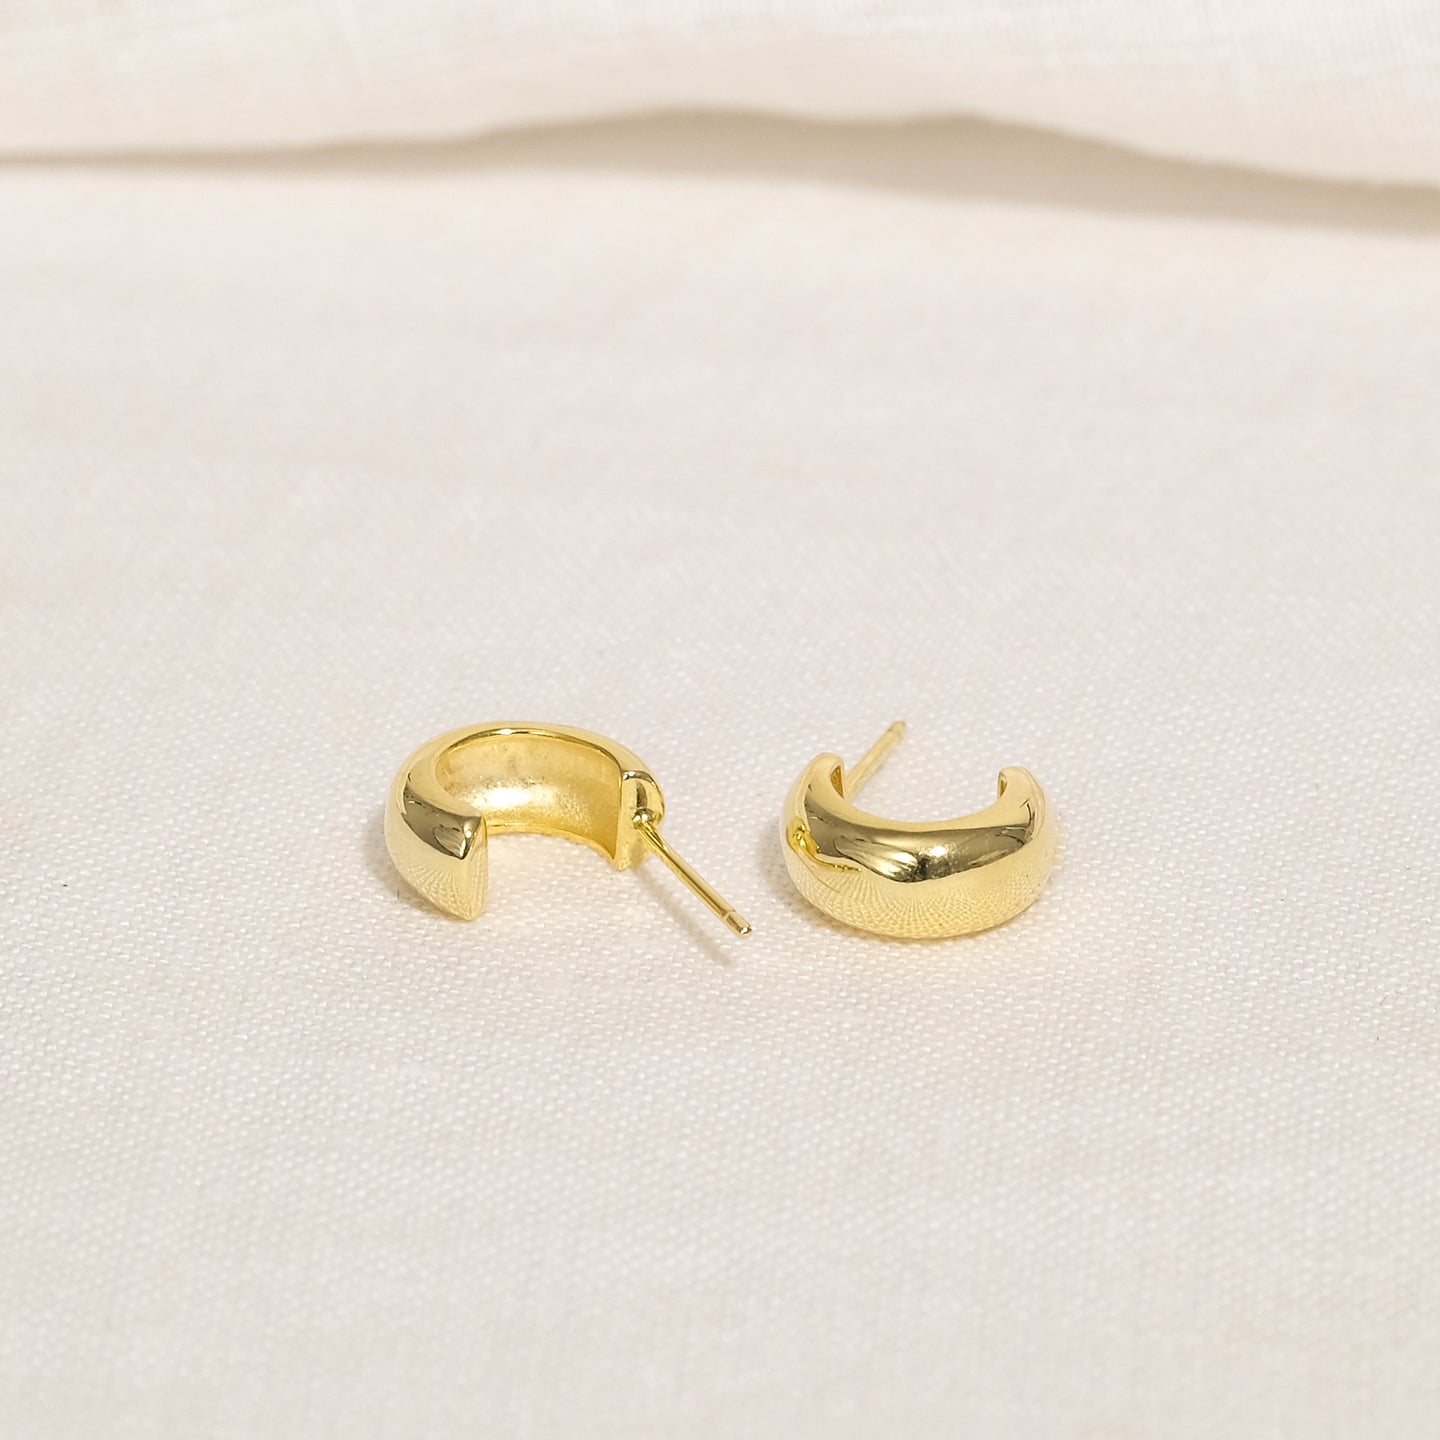 products/gimma-earrings-18k-gold-vermeil-2.jpg